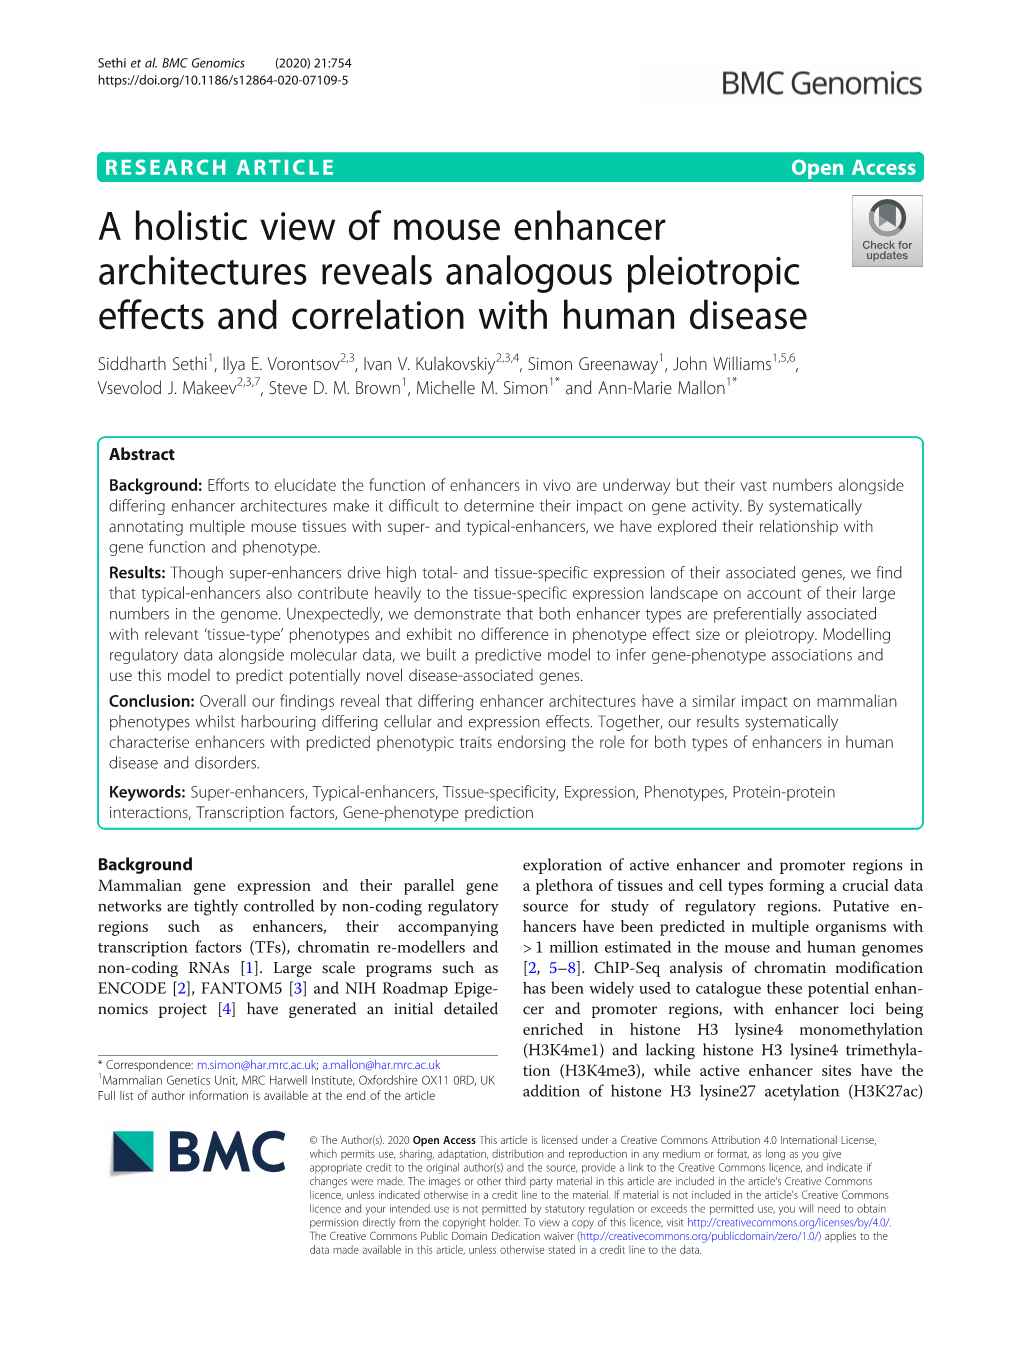 A Holistic View of Mouse Enhancer Architectures Reveals Analogous Pleiotropic Effects and Correlation with Human Disease Siddharth Sethi1, Ilya E